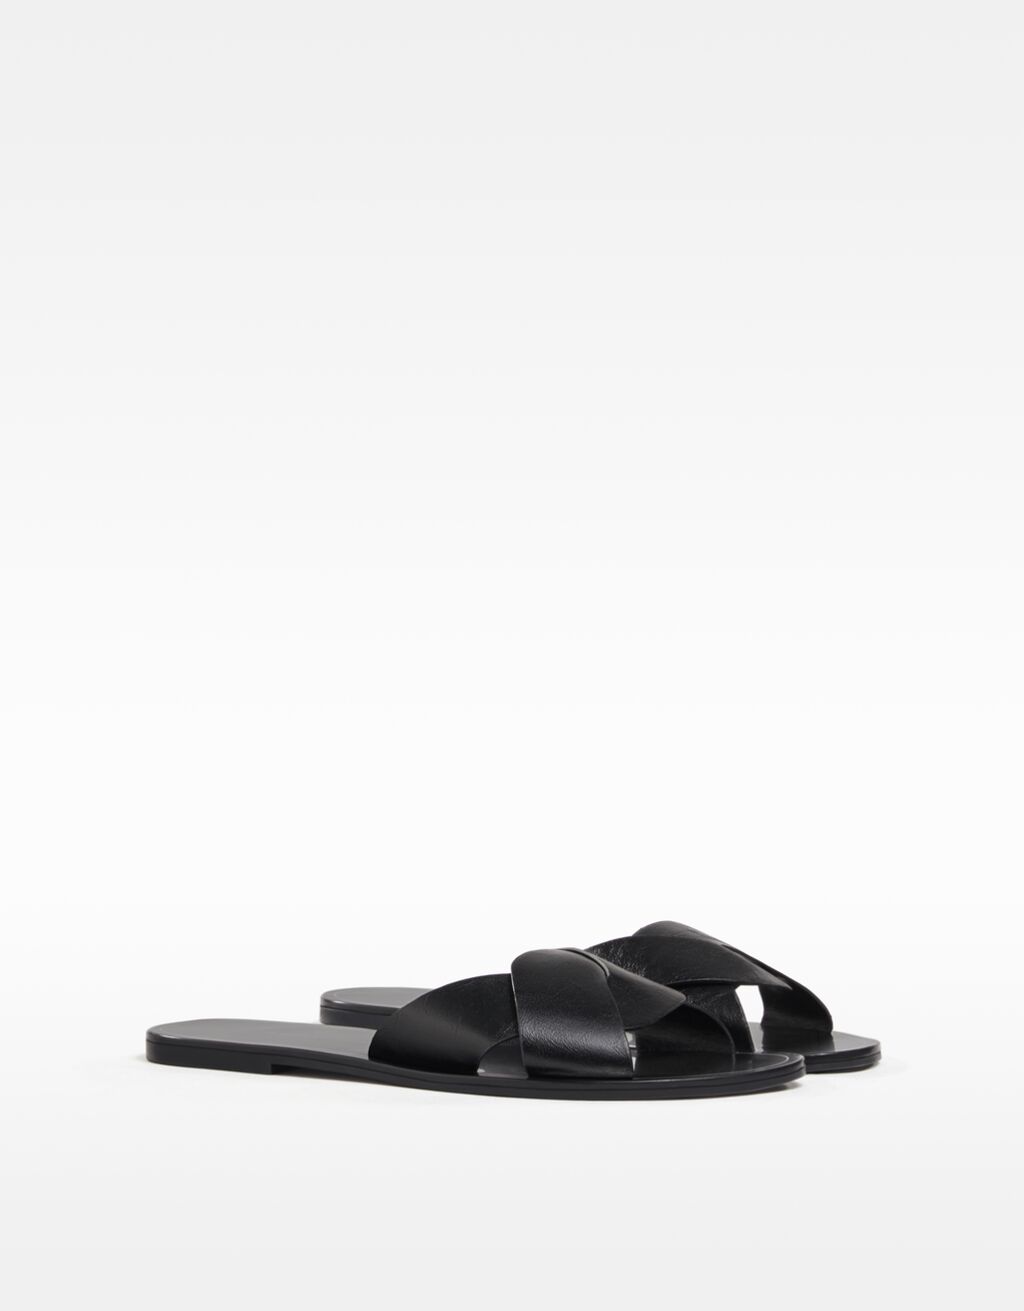 michael kors becky sandals black